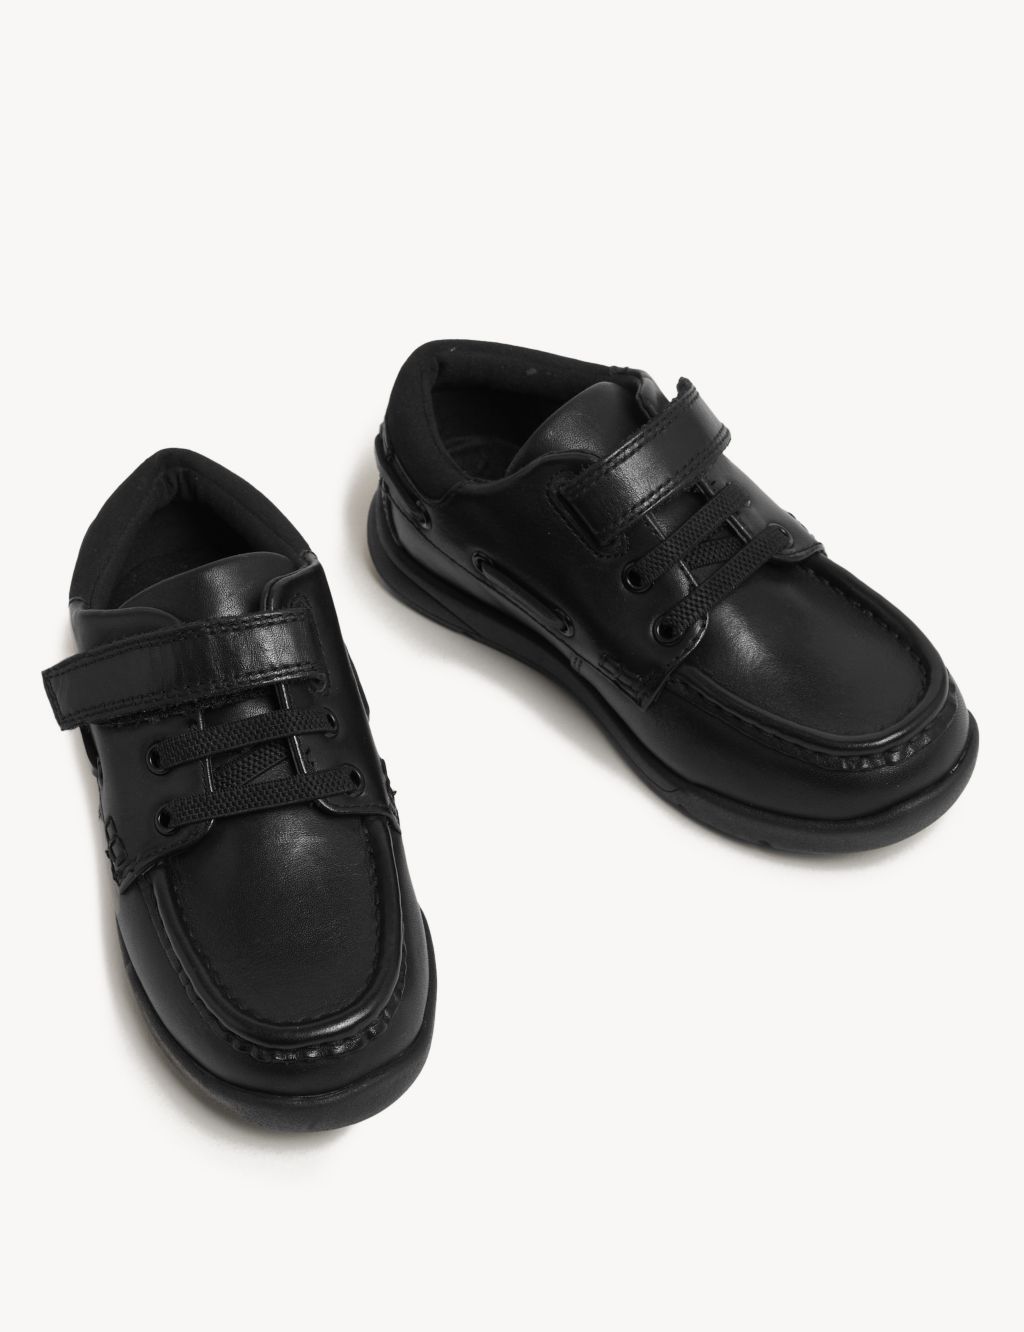 Kids' Leather Freshfeet™ Riptape School Shoes (8 Small - 2 Large) image 2